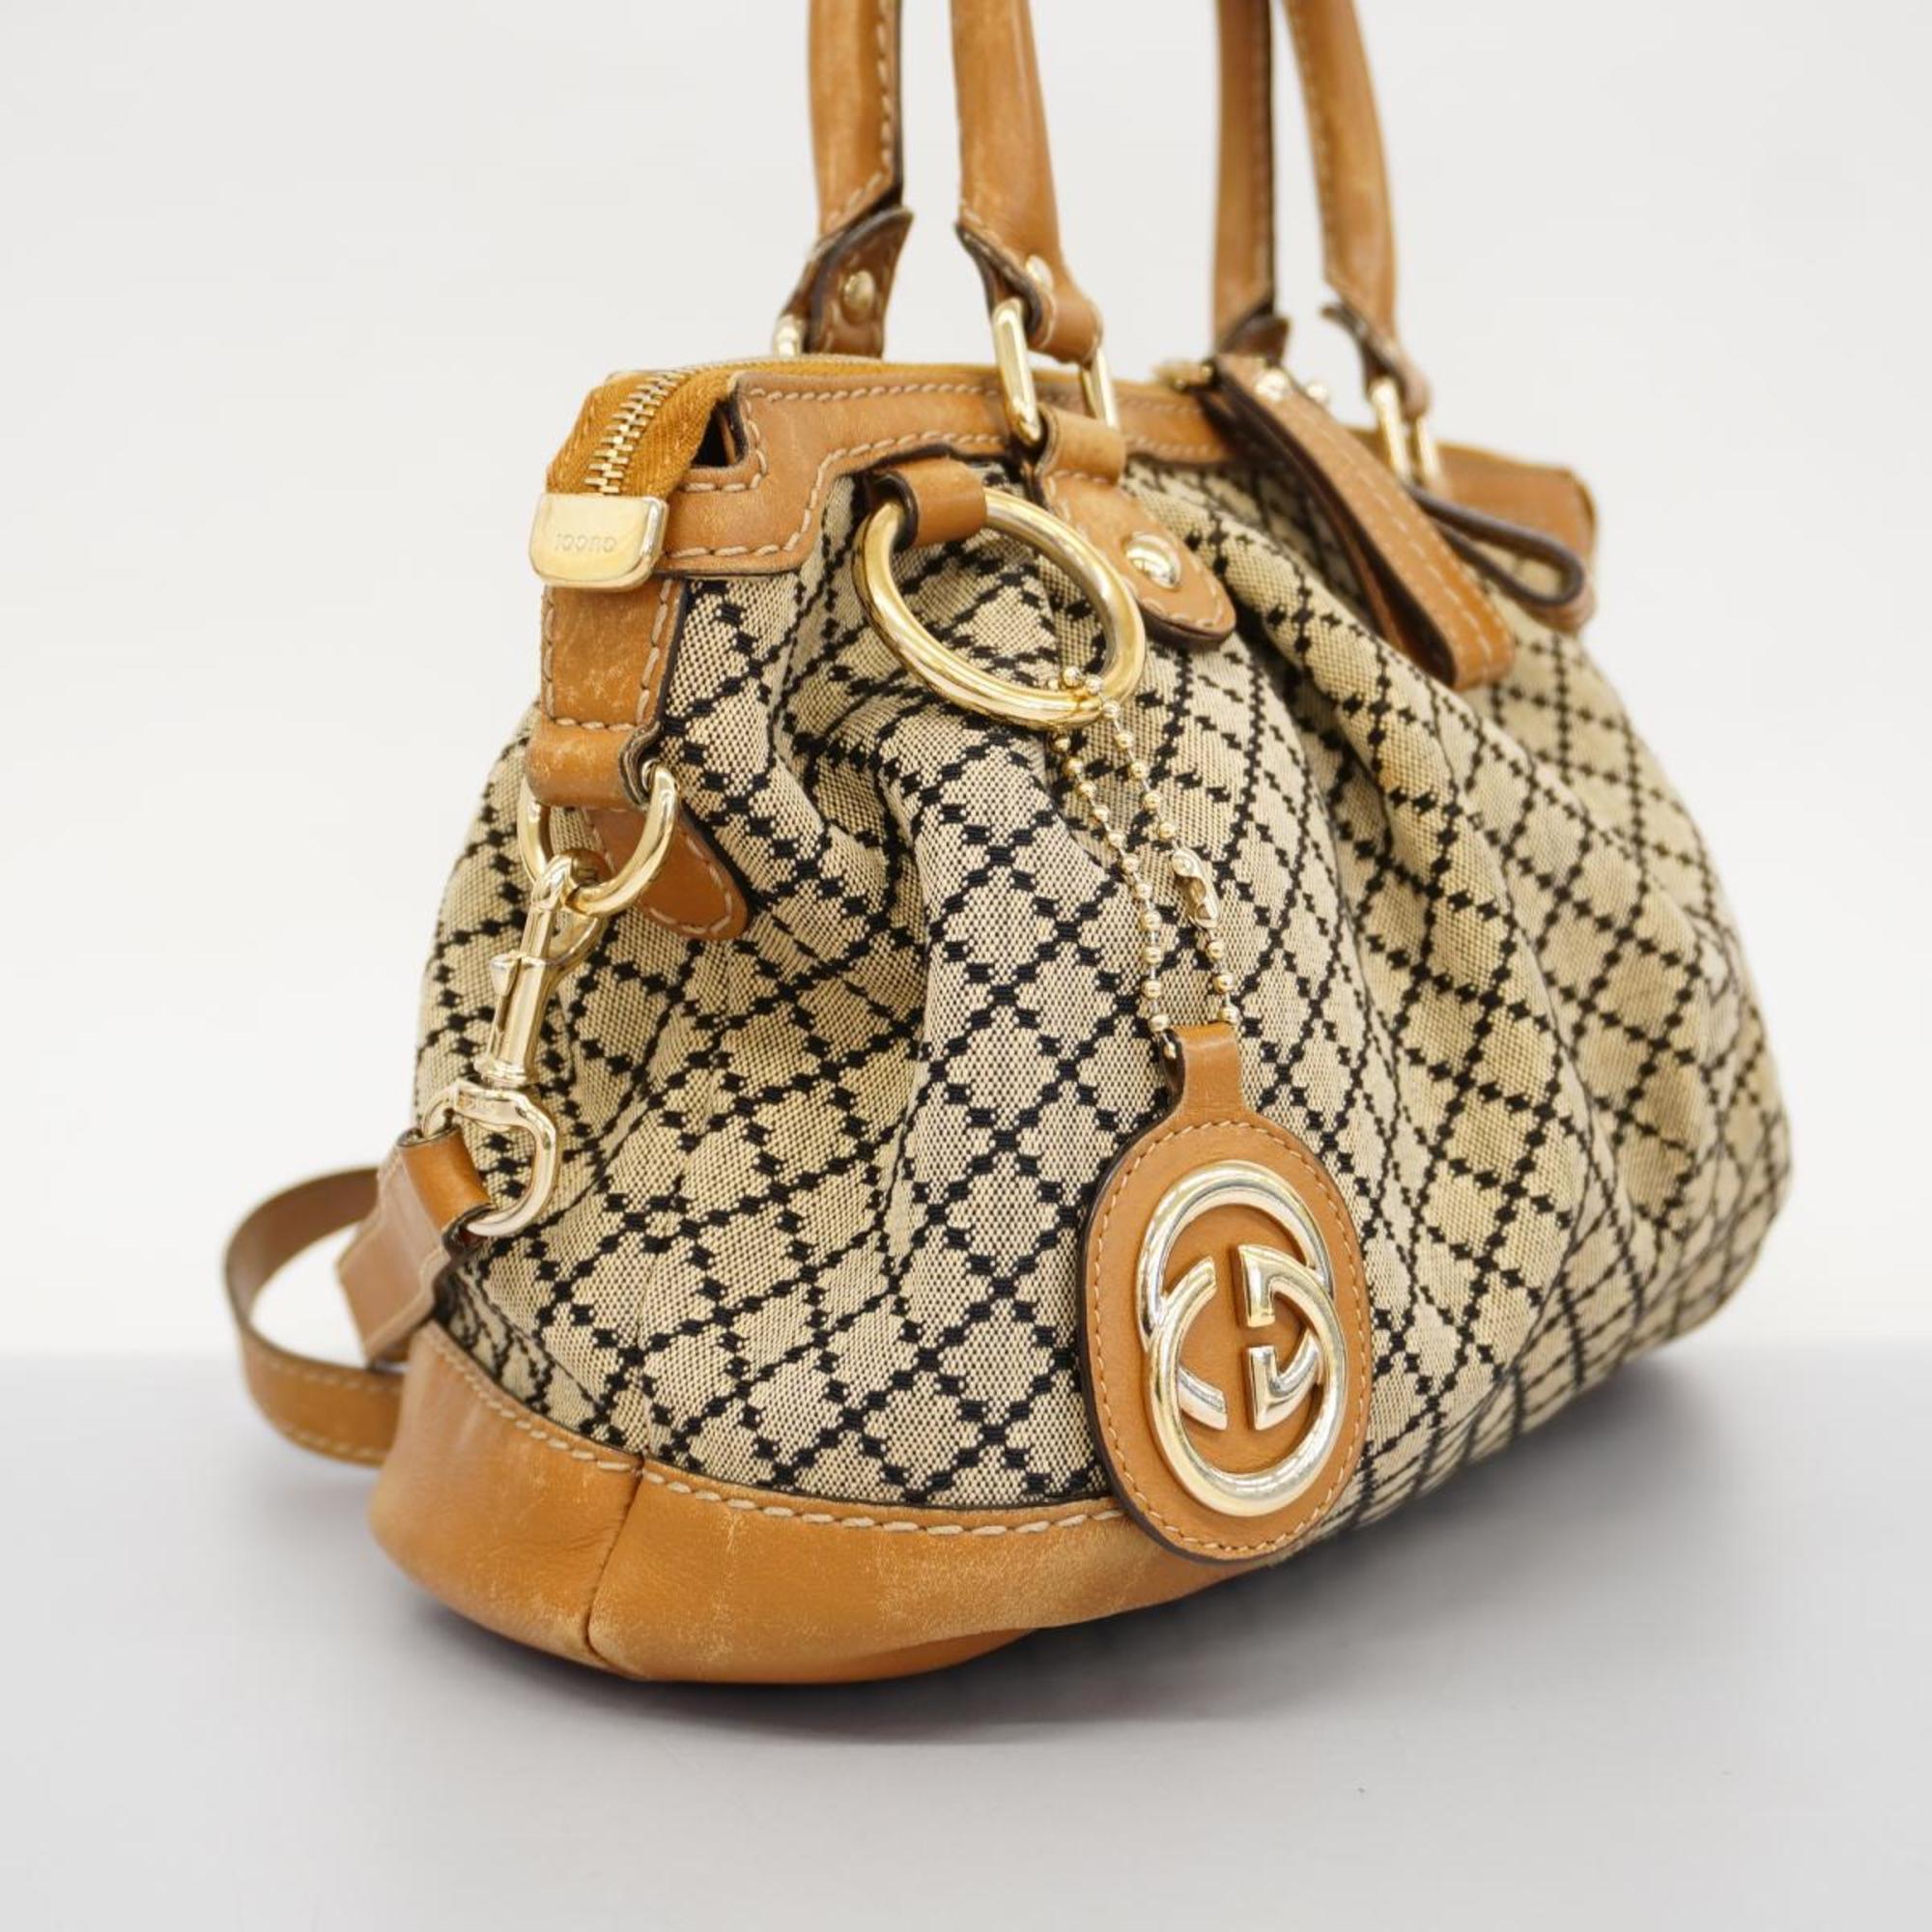 Gucci Shoulder Bag GG Canvas Diamante 247902 Leather Light Brown Champagne Women's